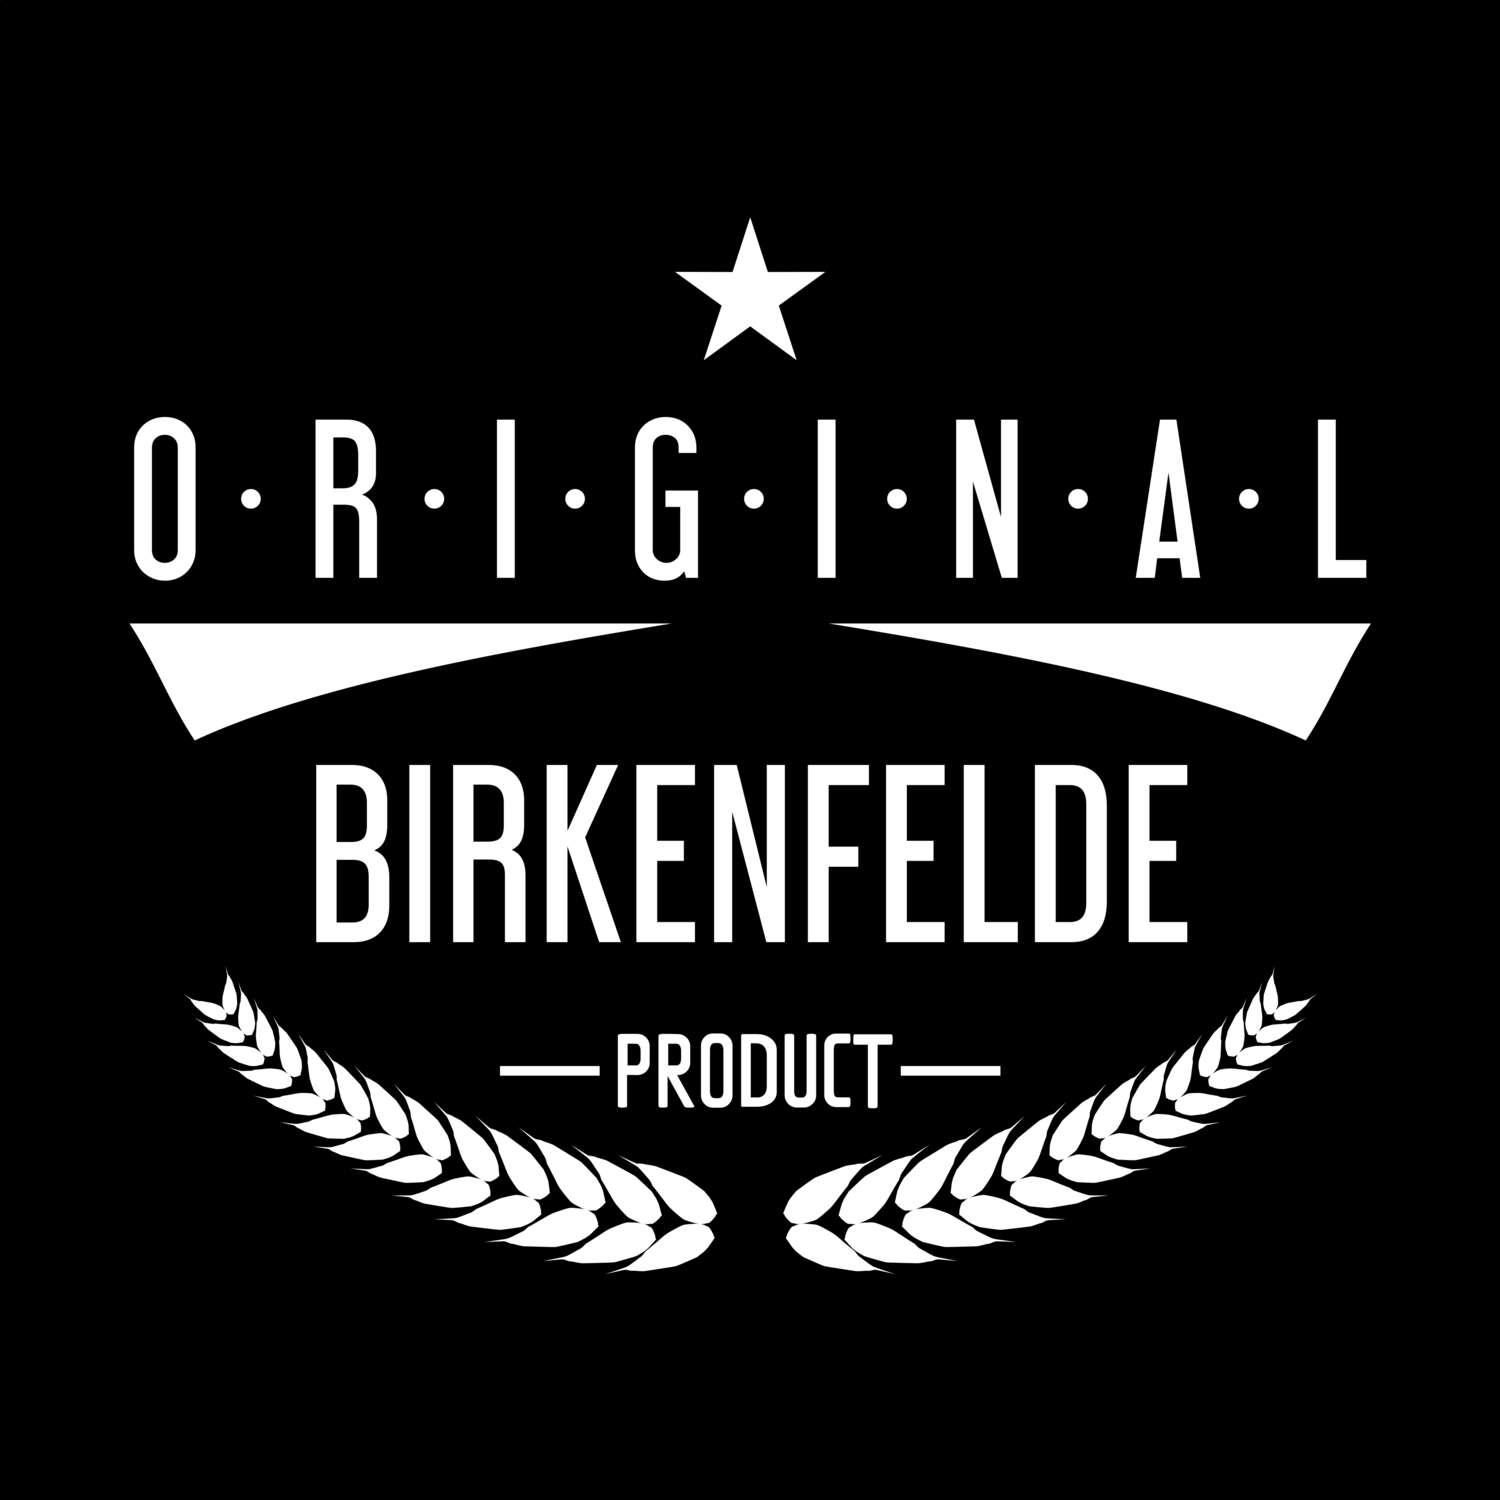 Birkenfelde T-Shirt »Original Product«